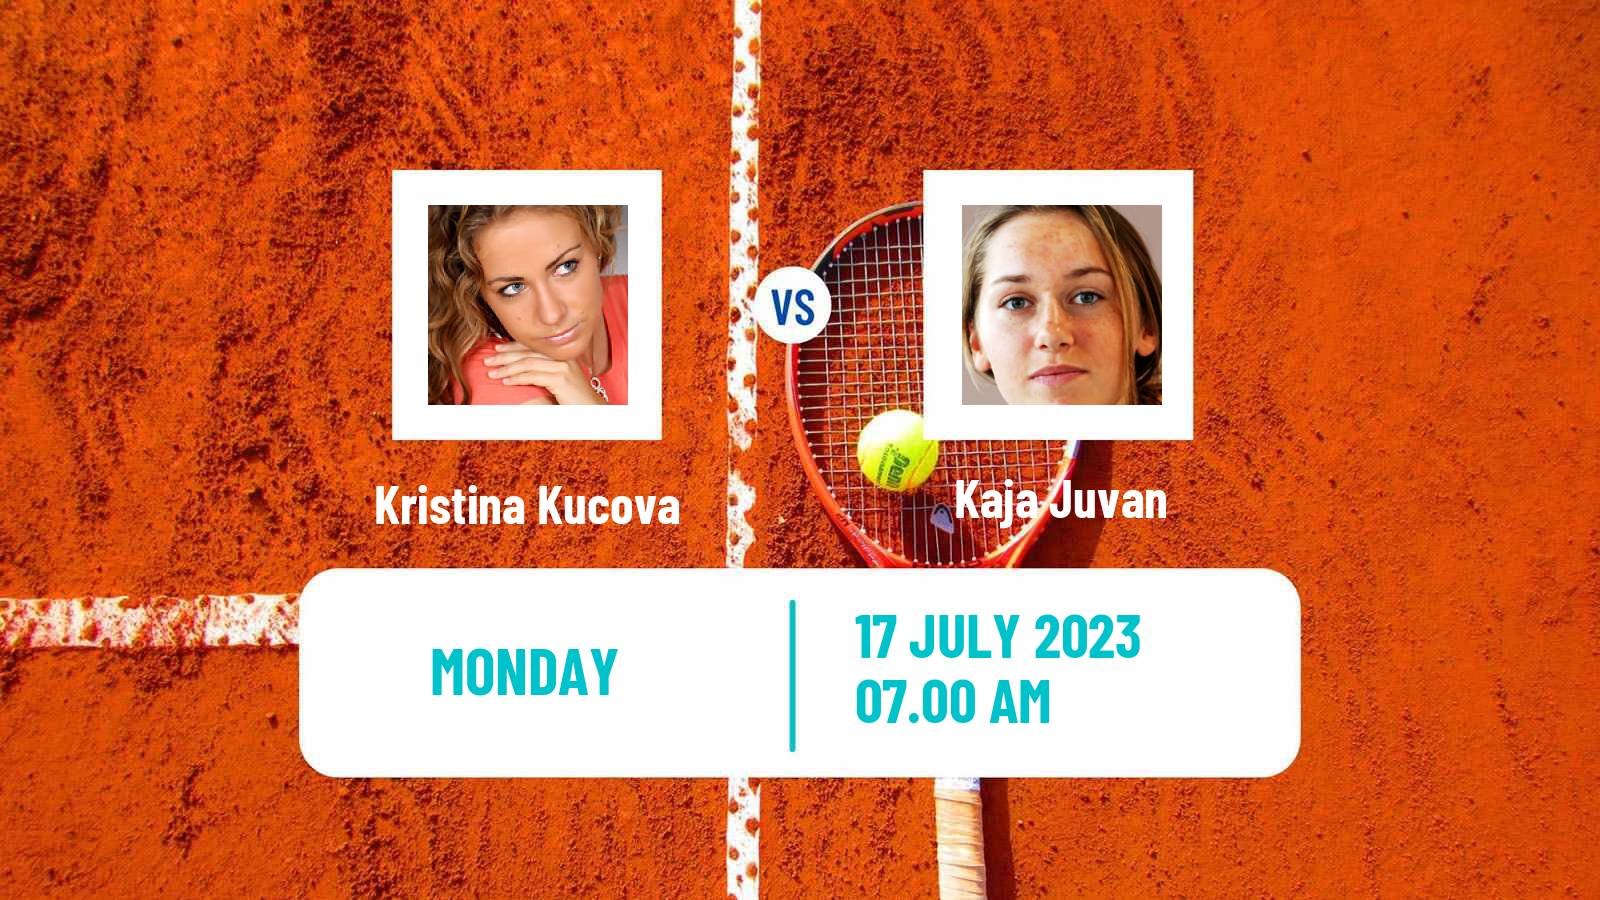 Tennis WTA Budapest Kristina Kucova - Kaja Juvan